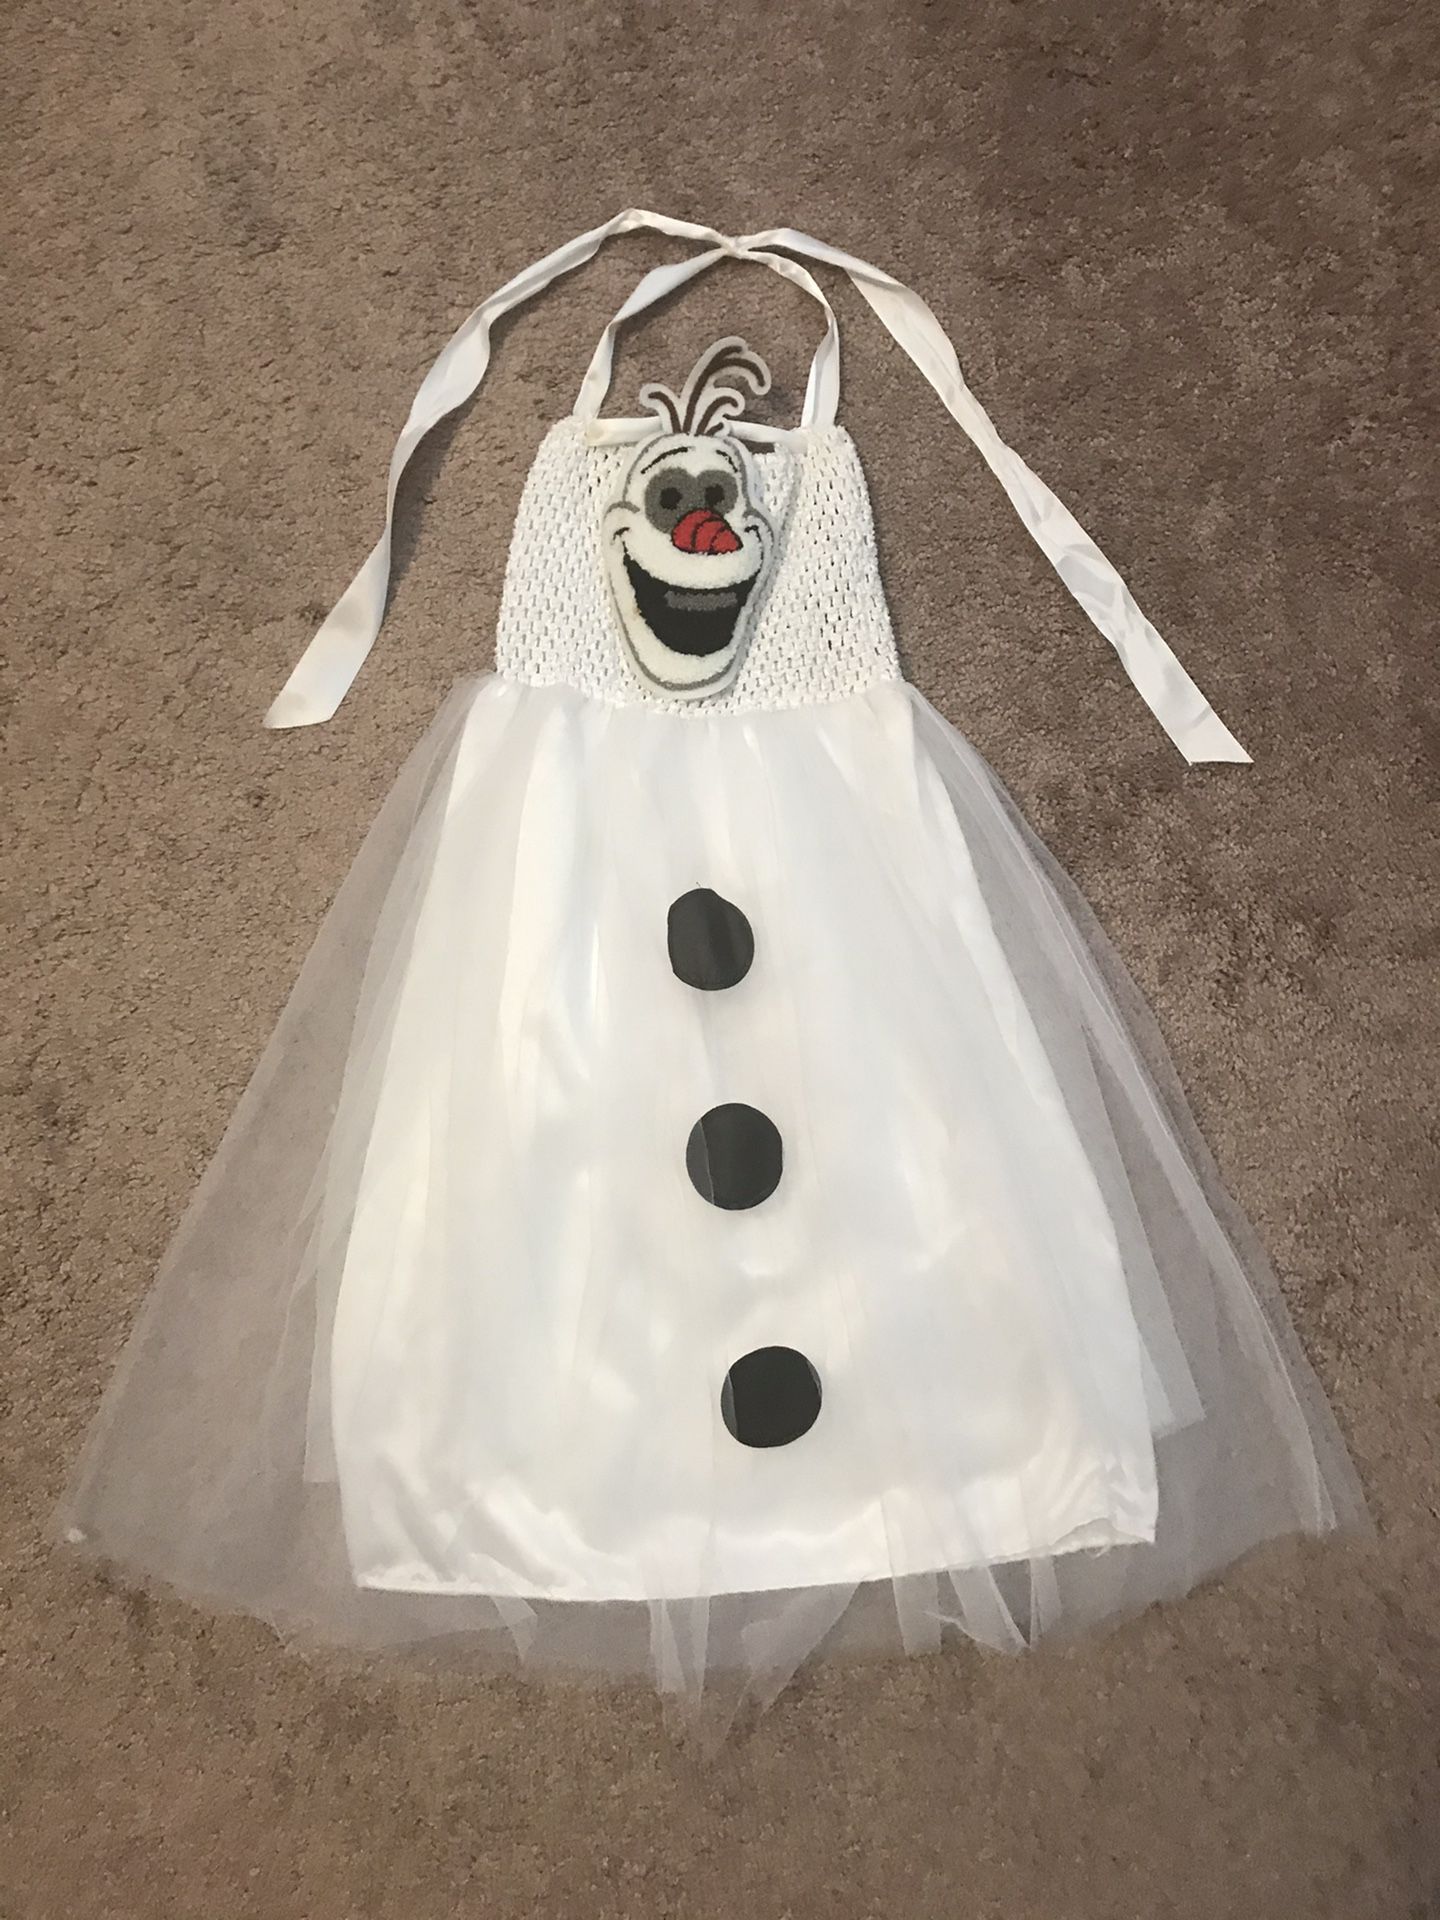 Olaf dress